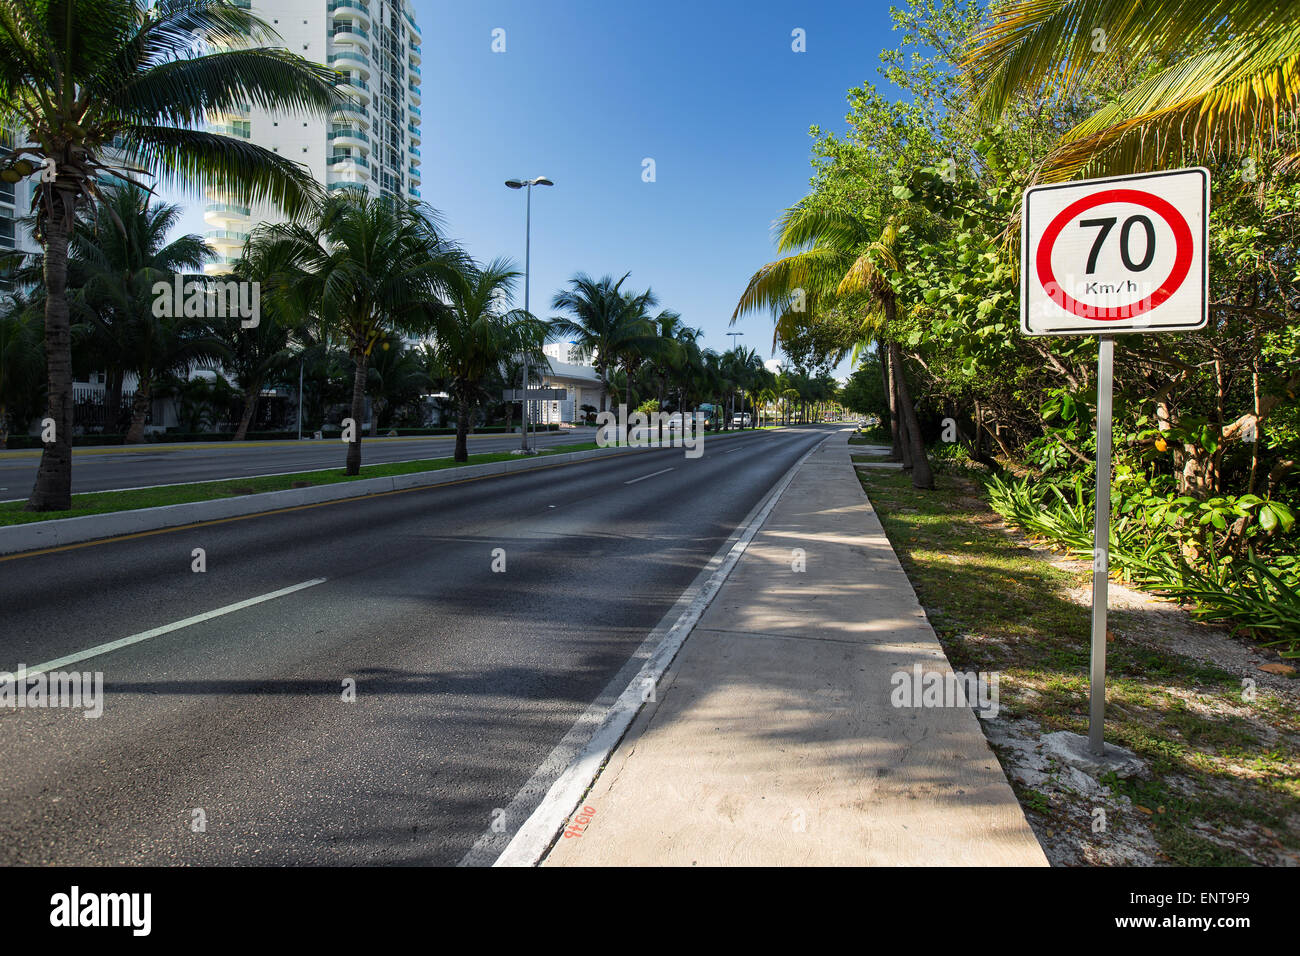 Seventy kilometers per hour speed limit on caribbean street road Stock Photo